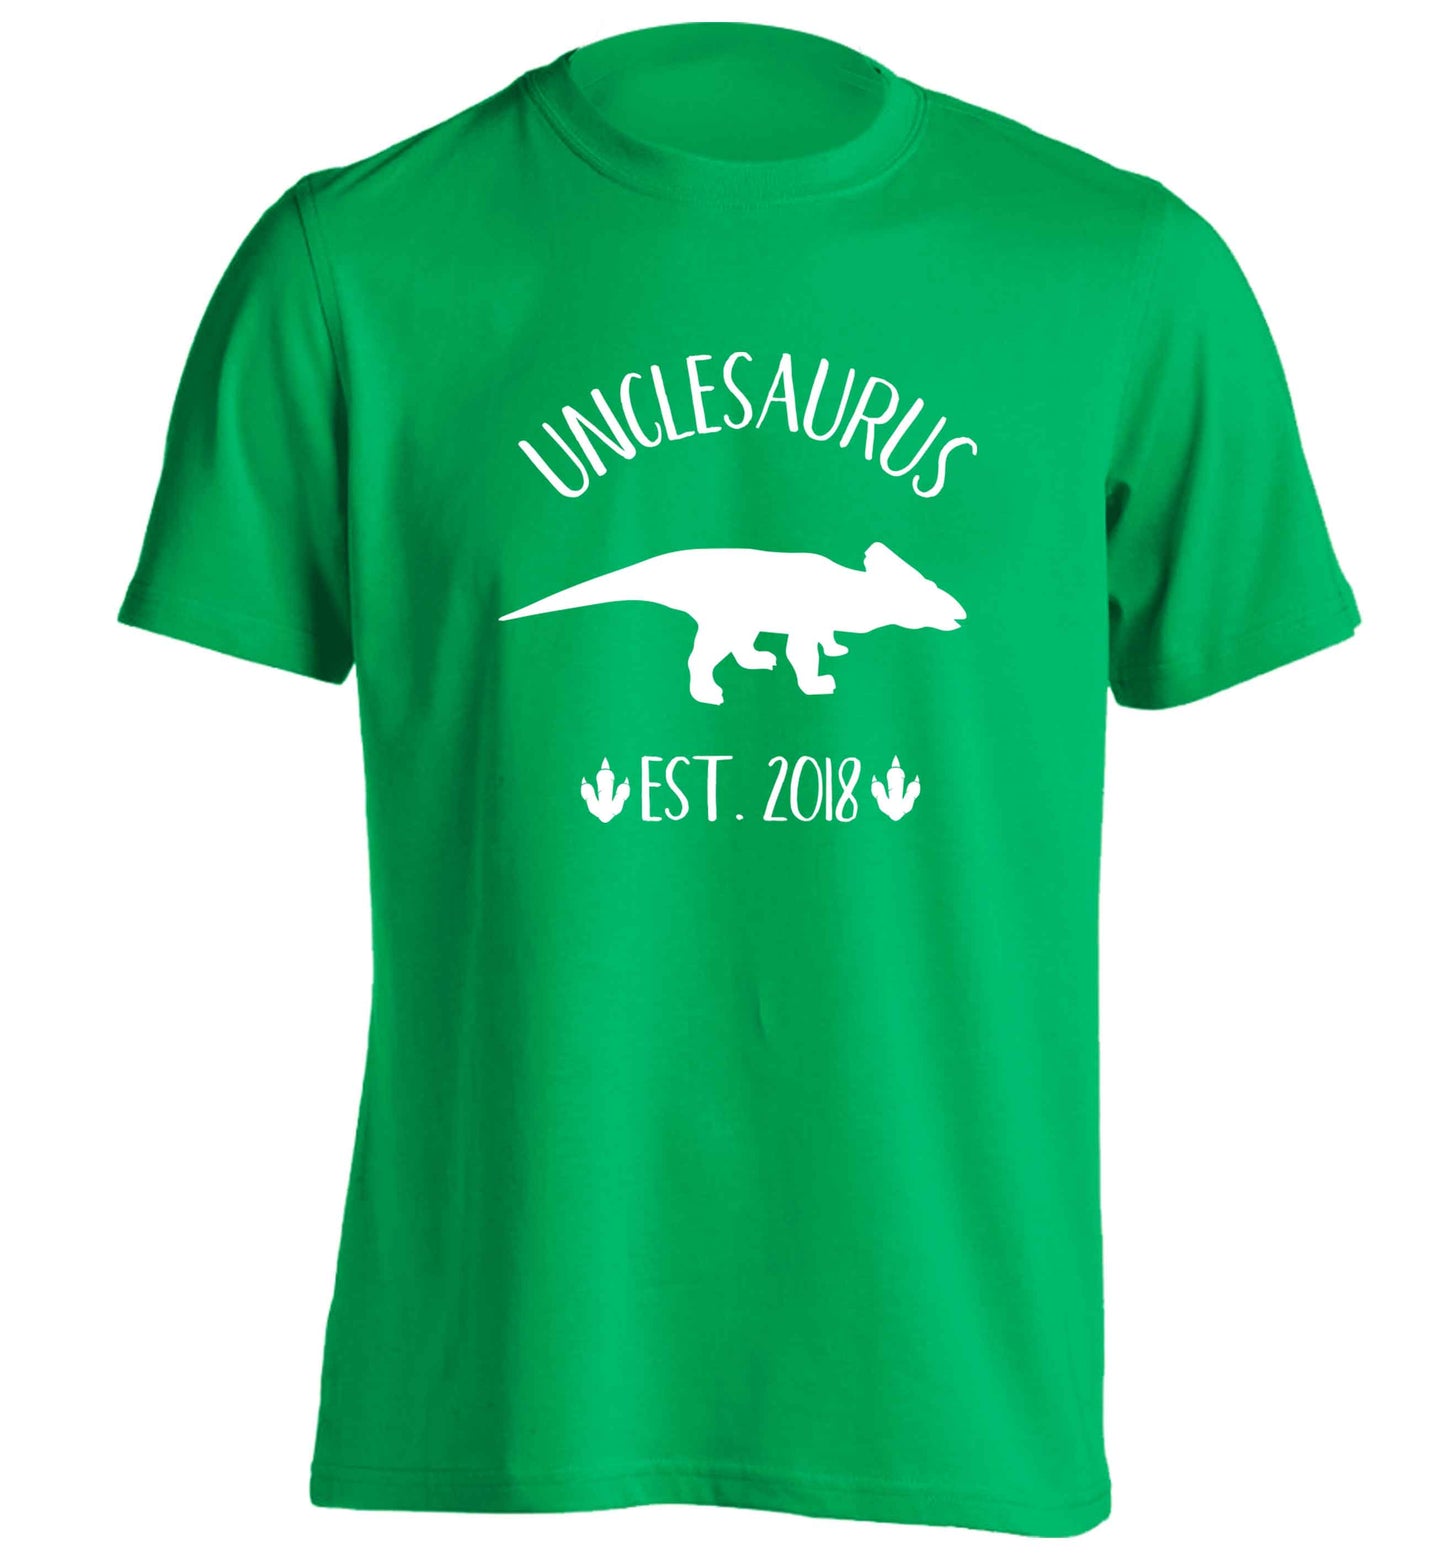 Personalised unclesaurus since (custom date) adults unisex green Tshirt 2XL